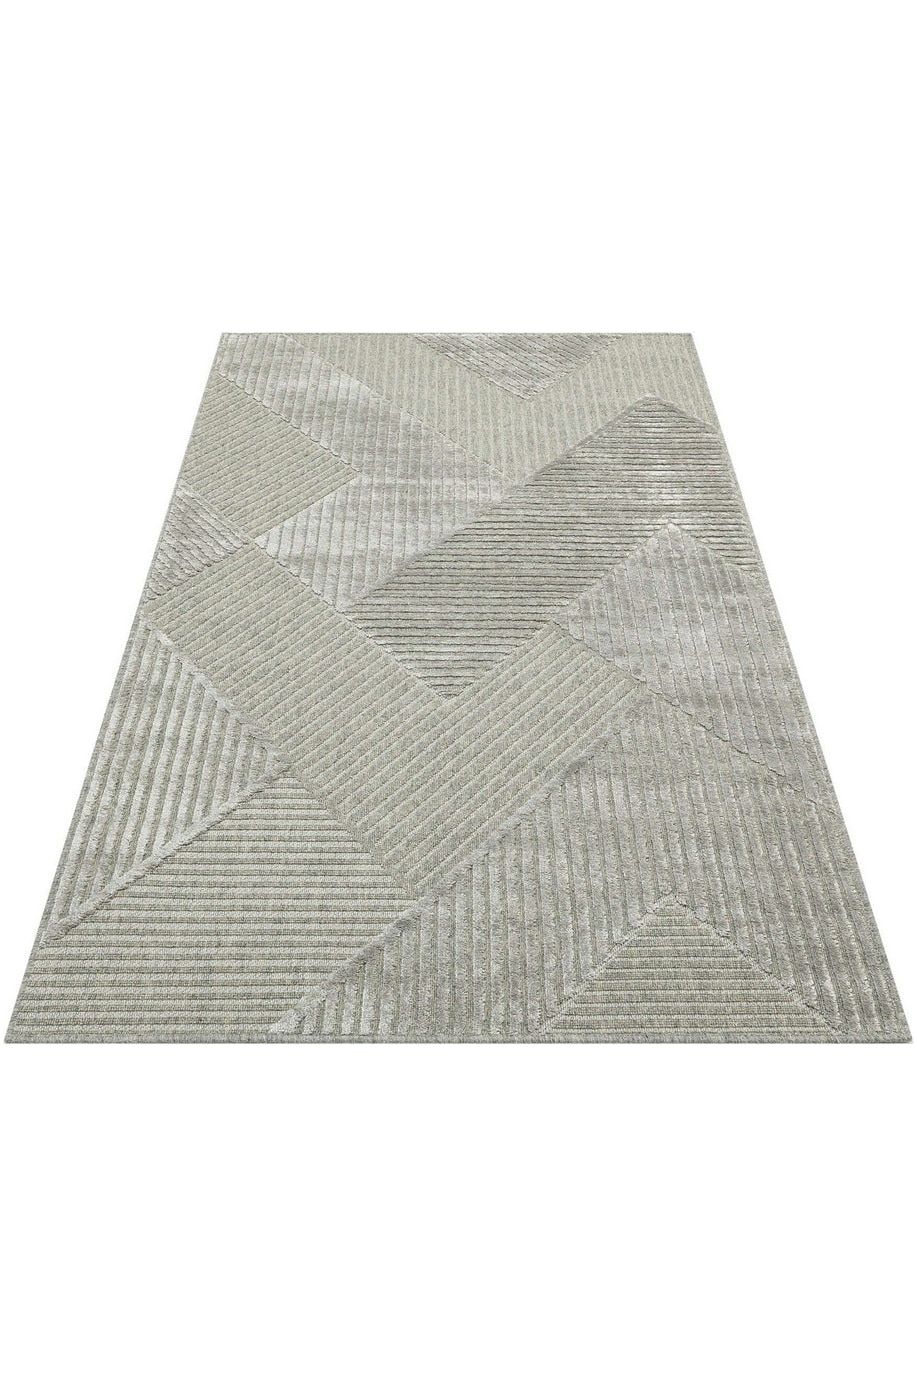 #Turkish_Carpets_Rugs# #Modern_Carpets# #Abrash_Carpets#Znt 01 Grey